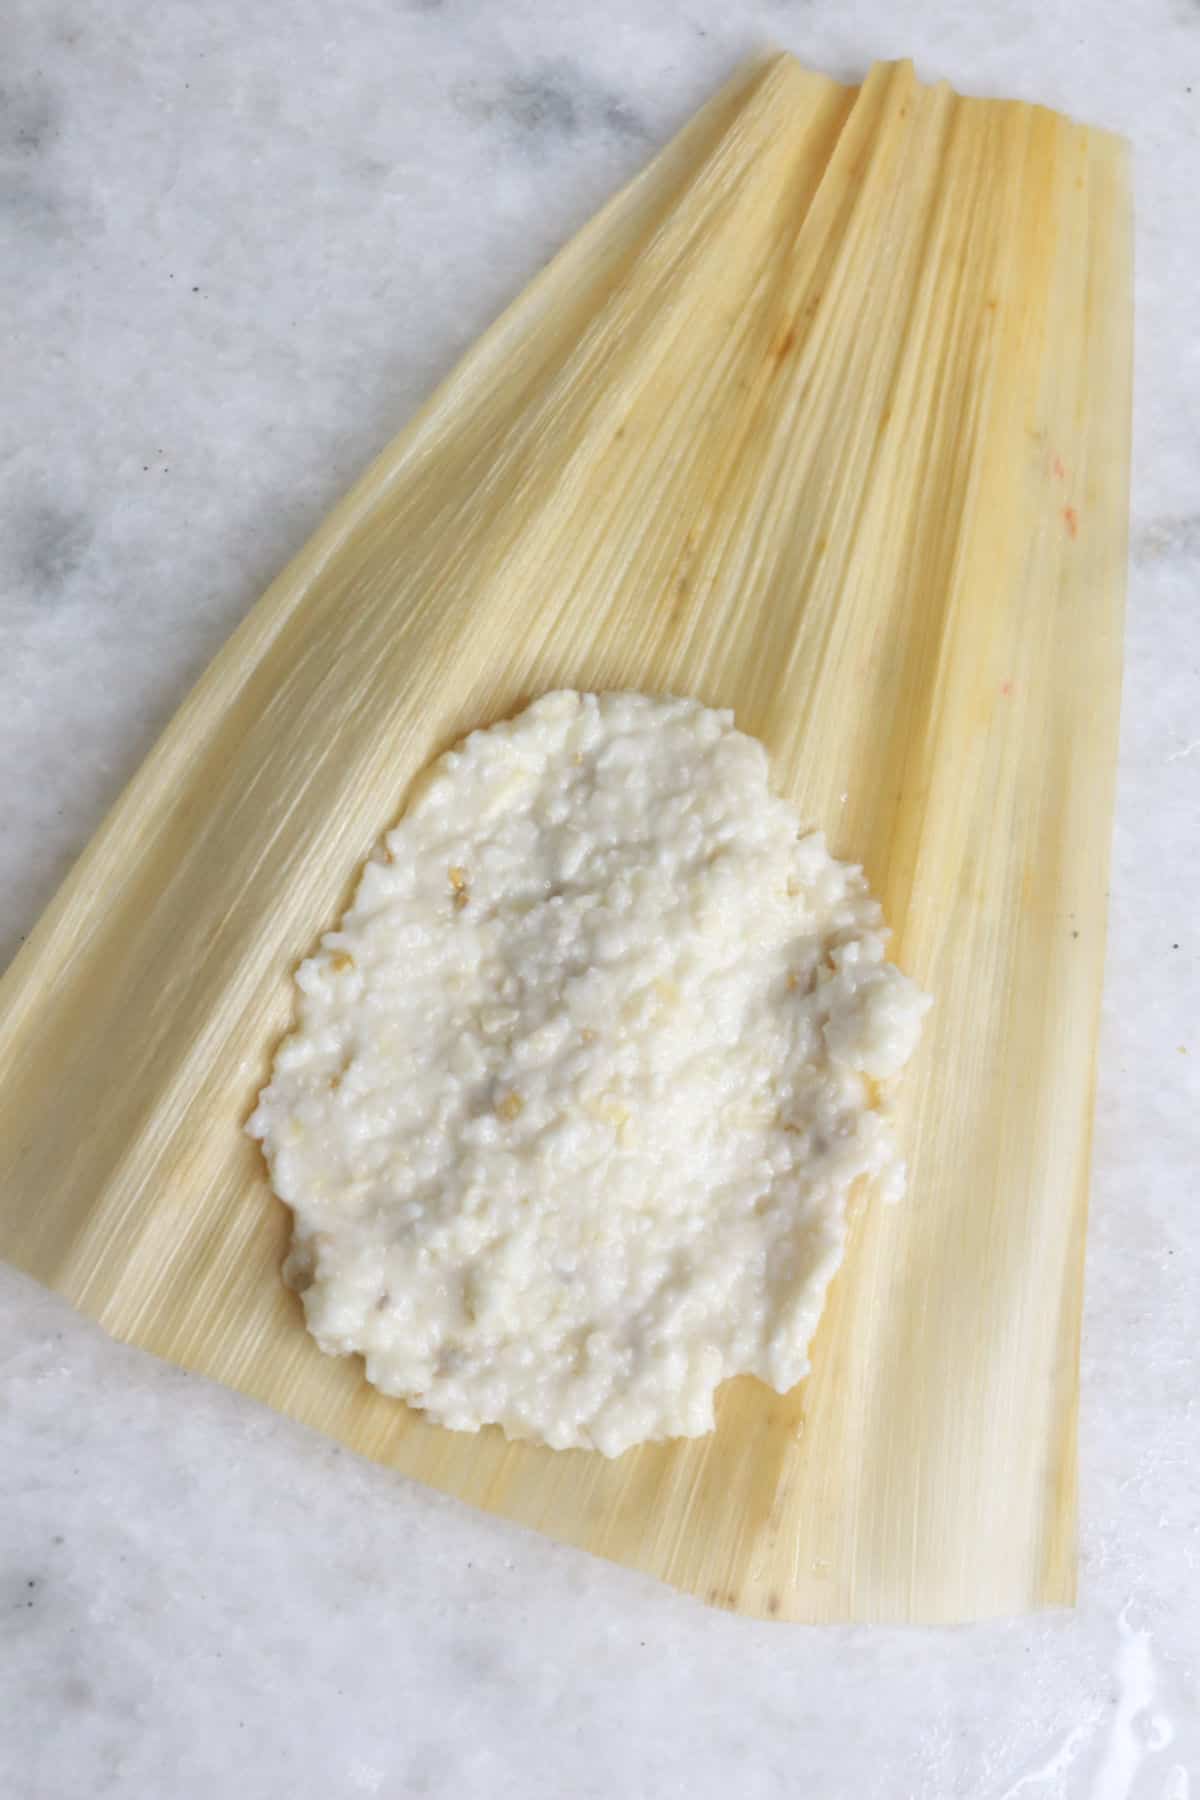 Masa for tamales spread on a corn husk